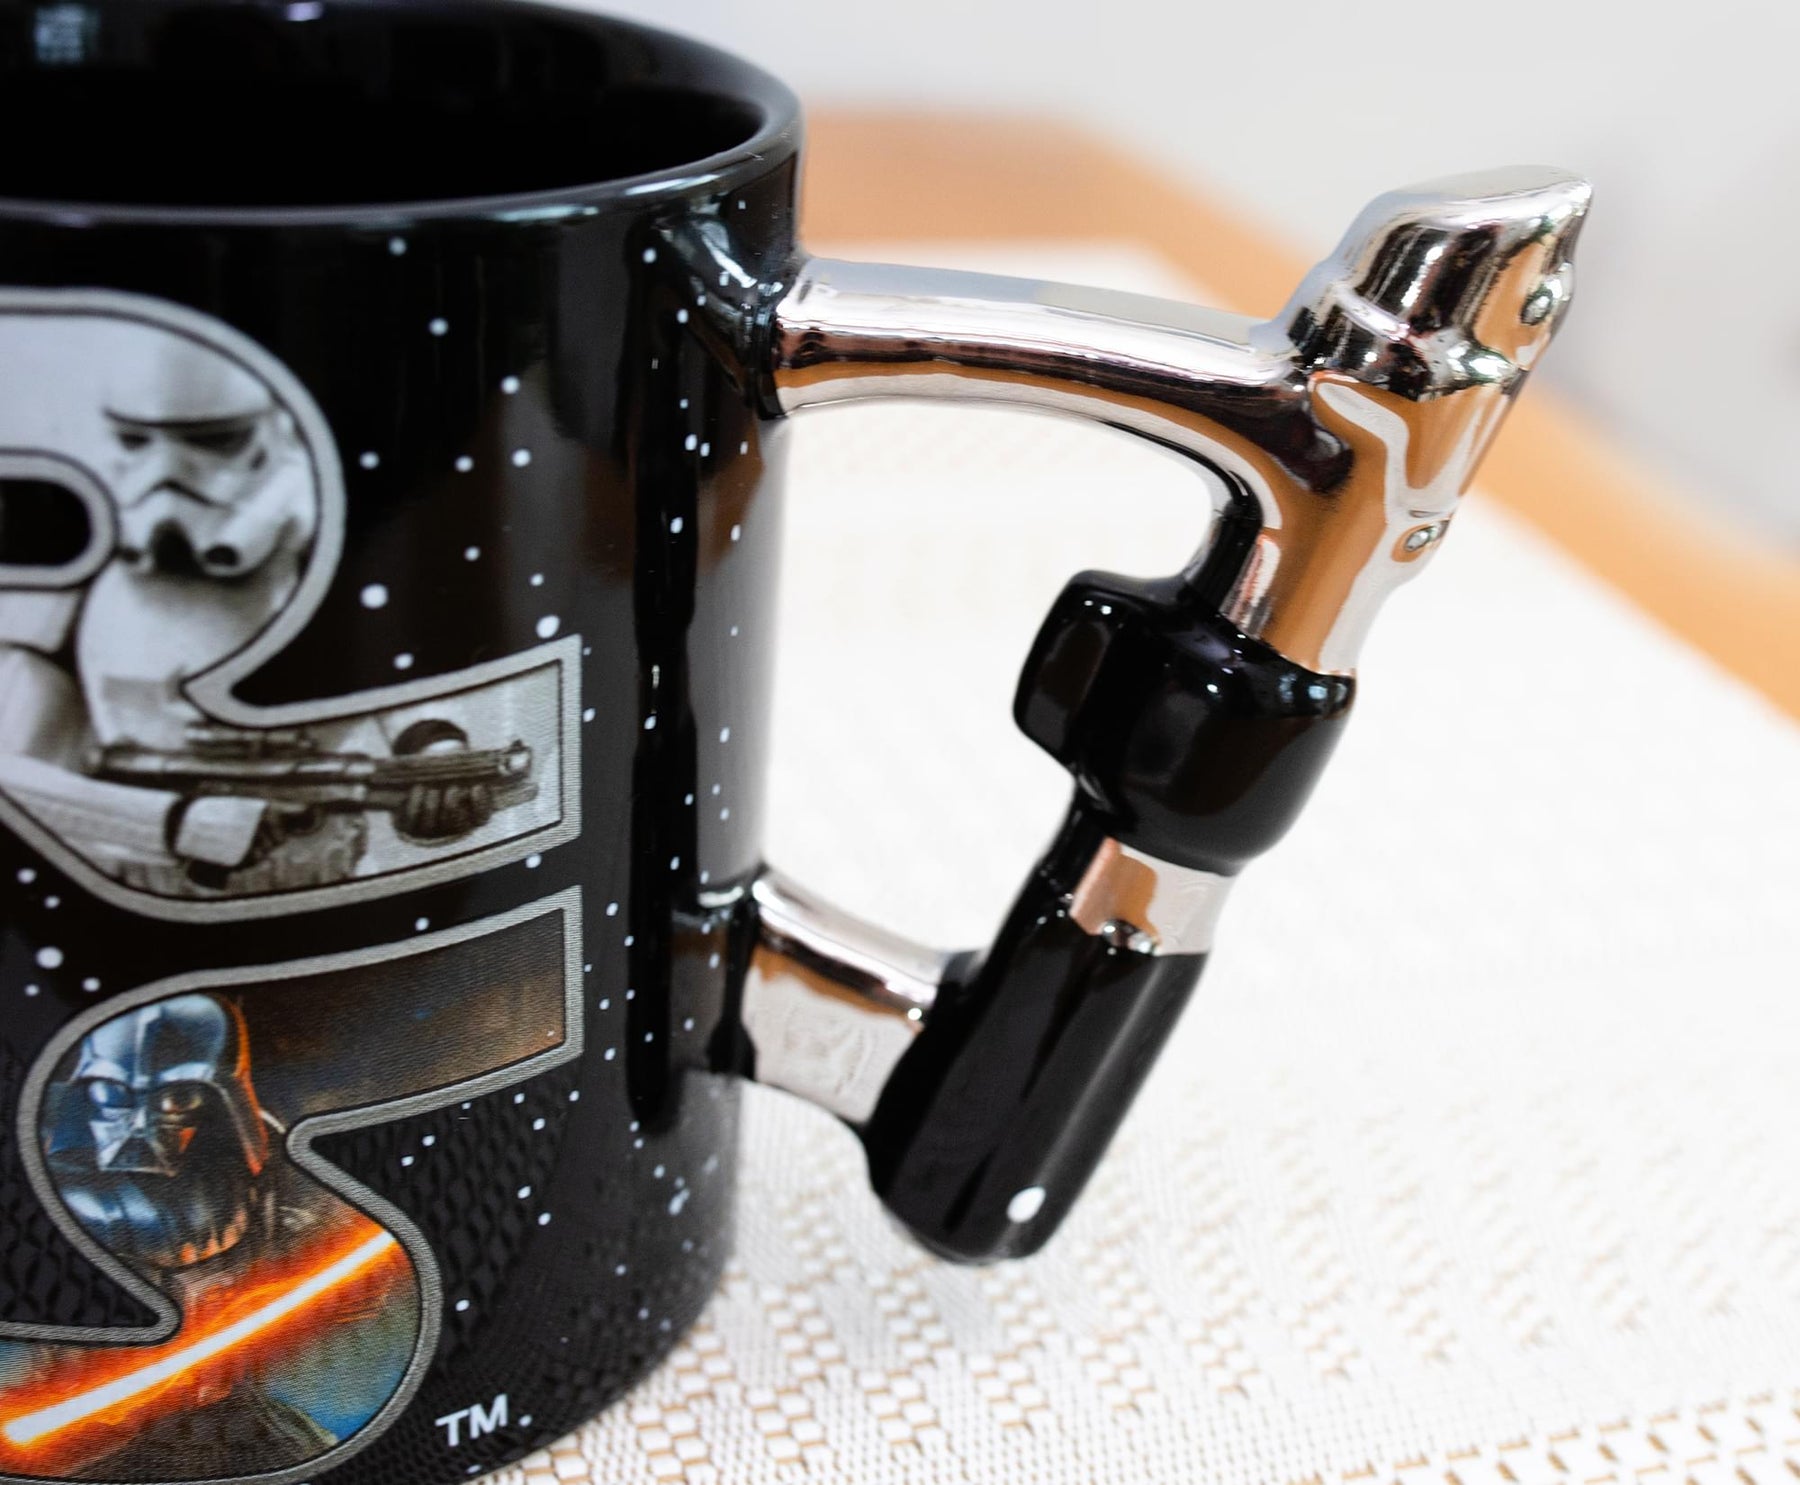 Star WarsLogo Heat Reveal Lightsabers 20oz Ceramic Mug